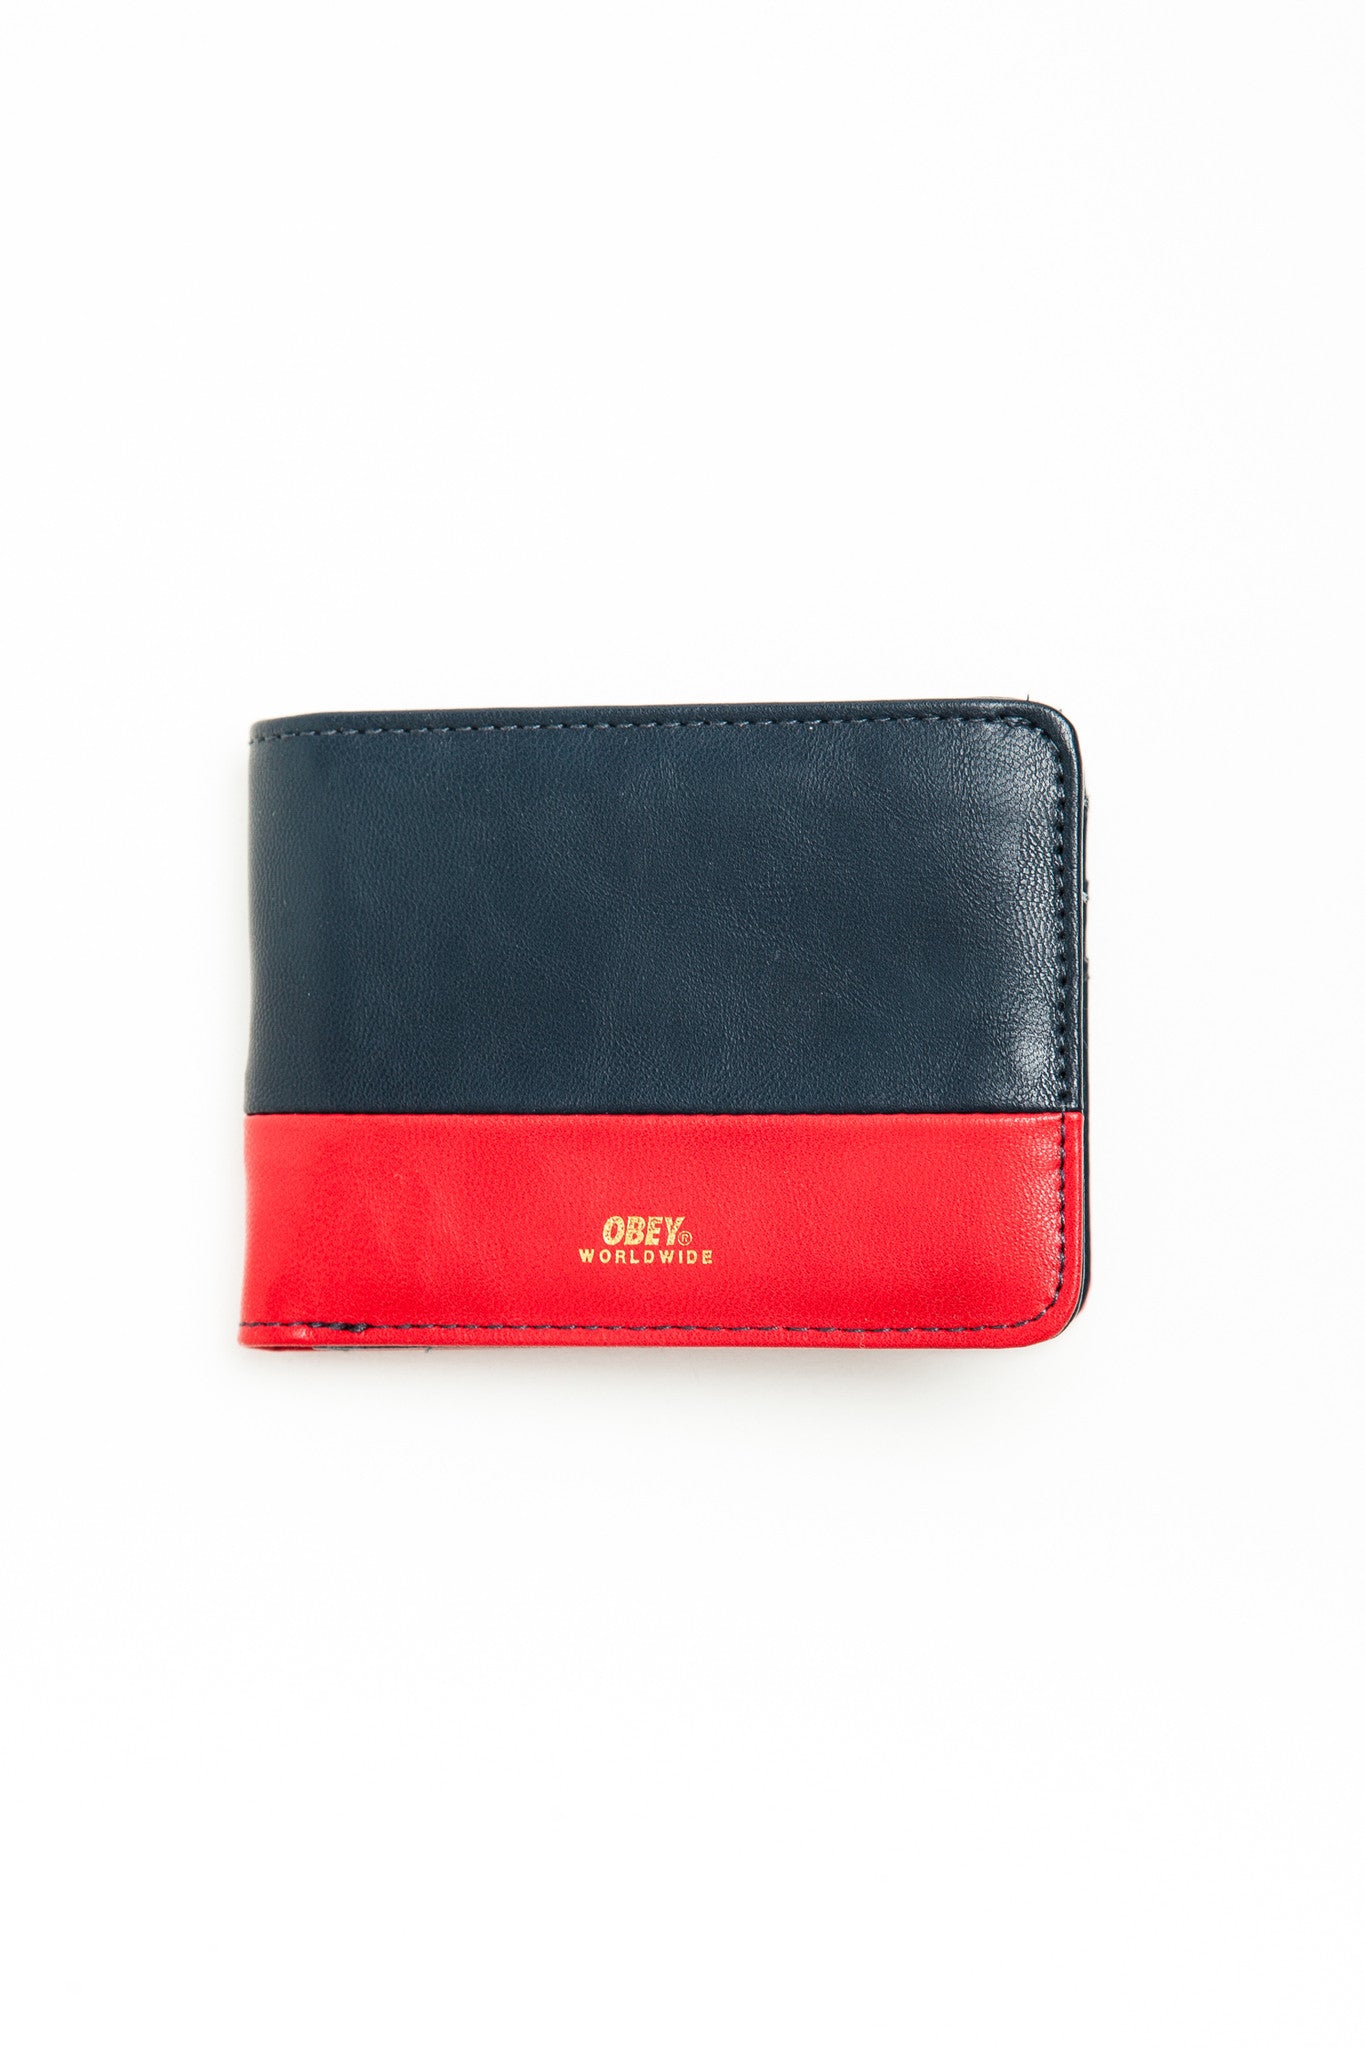 OBEY - Gentry Deuce Bi-Fold Wallet, Navy/Red - The Giant Peach